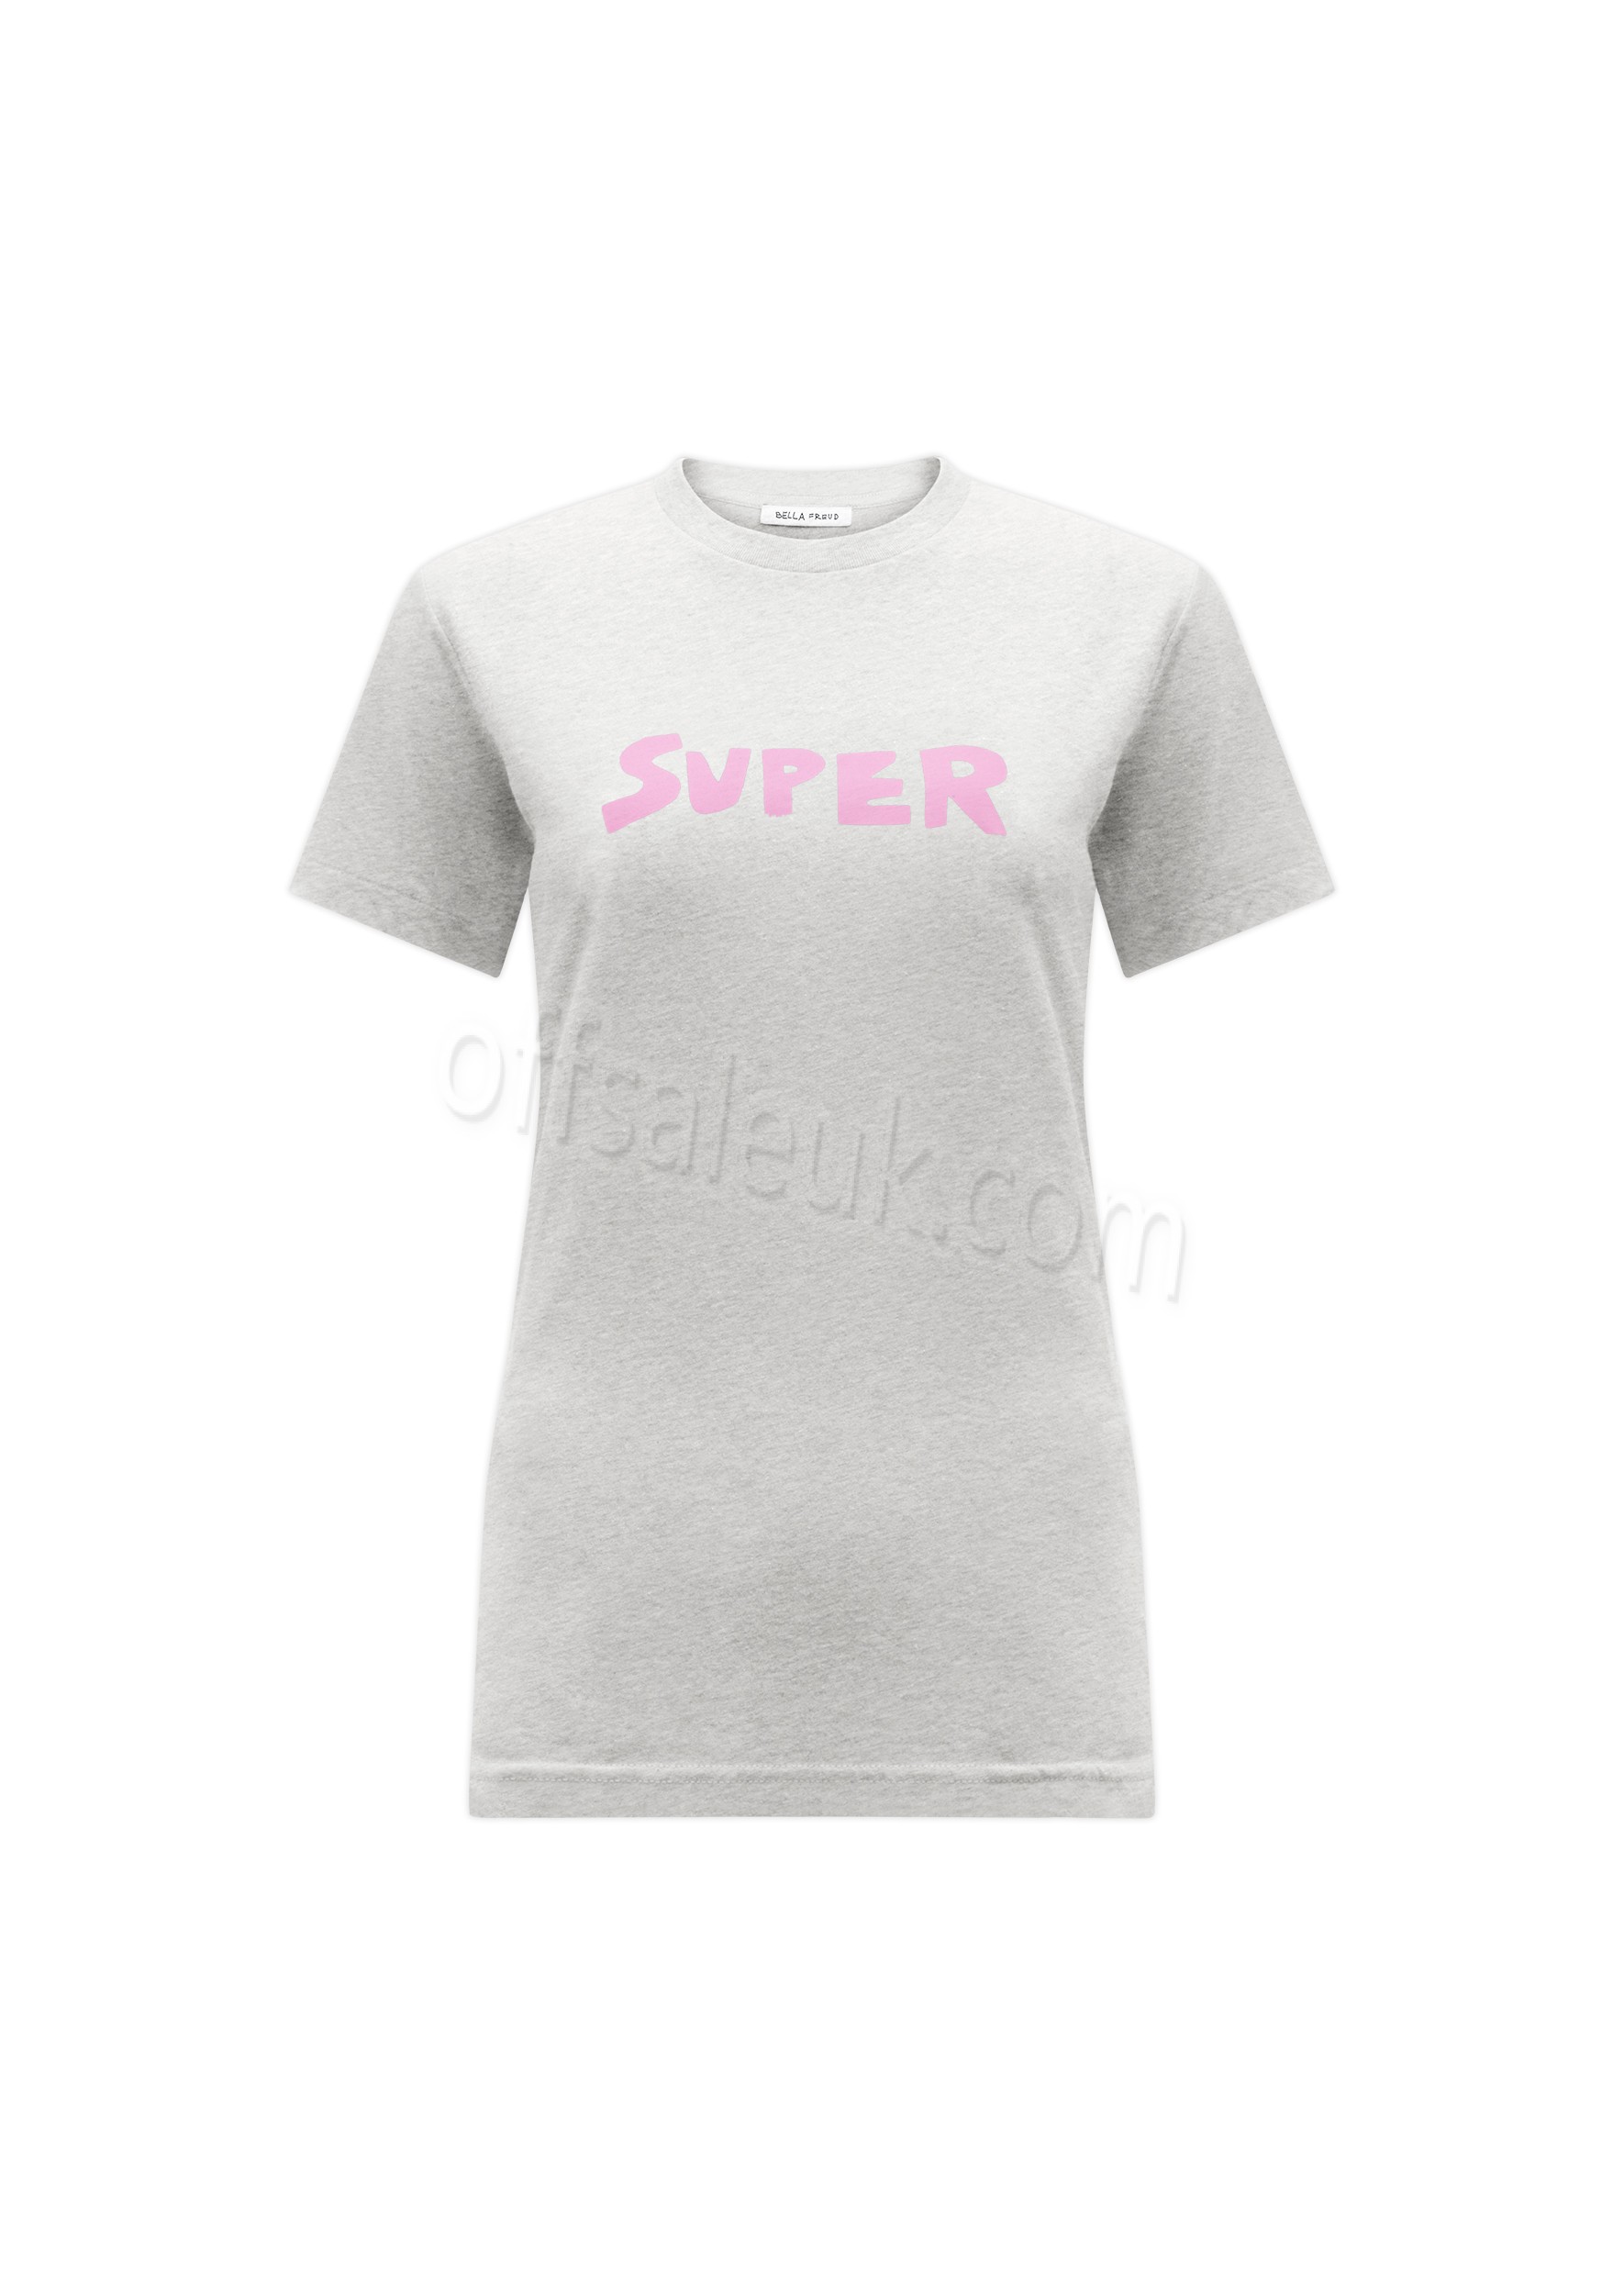 Bella Freud Super T-Shirt - Bella Freud Super T-Shirt